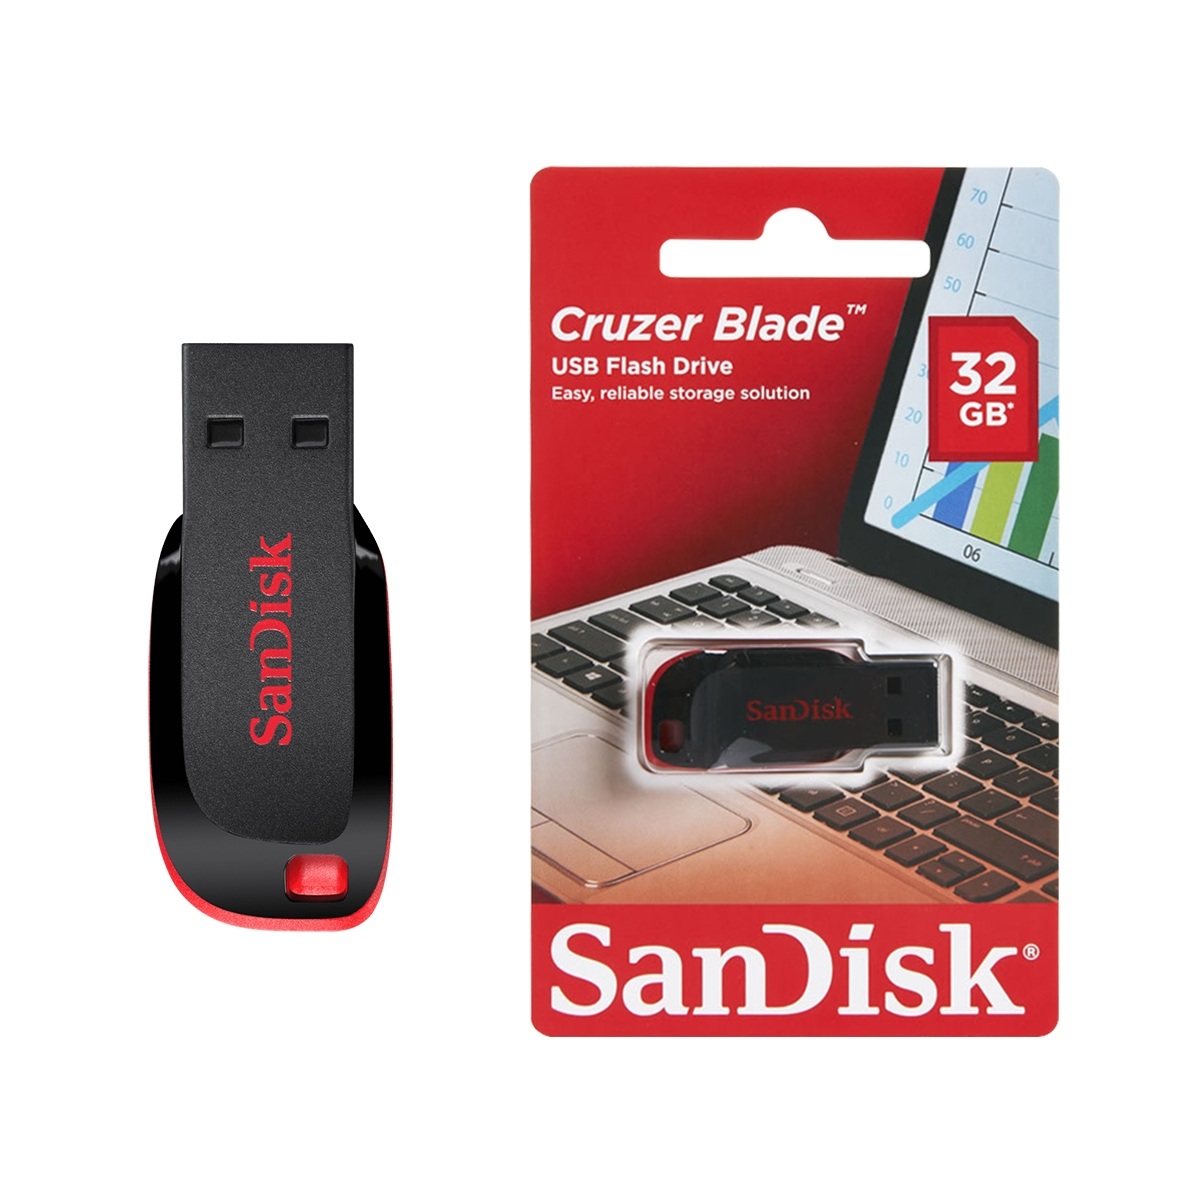 Sandisk Cruzer Blade USB Flash Drive 2.0 32GB